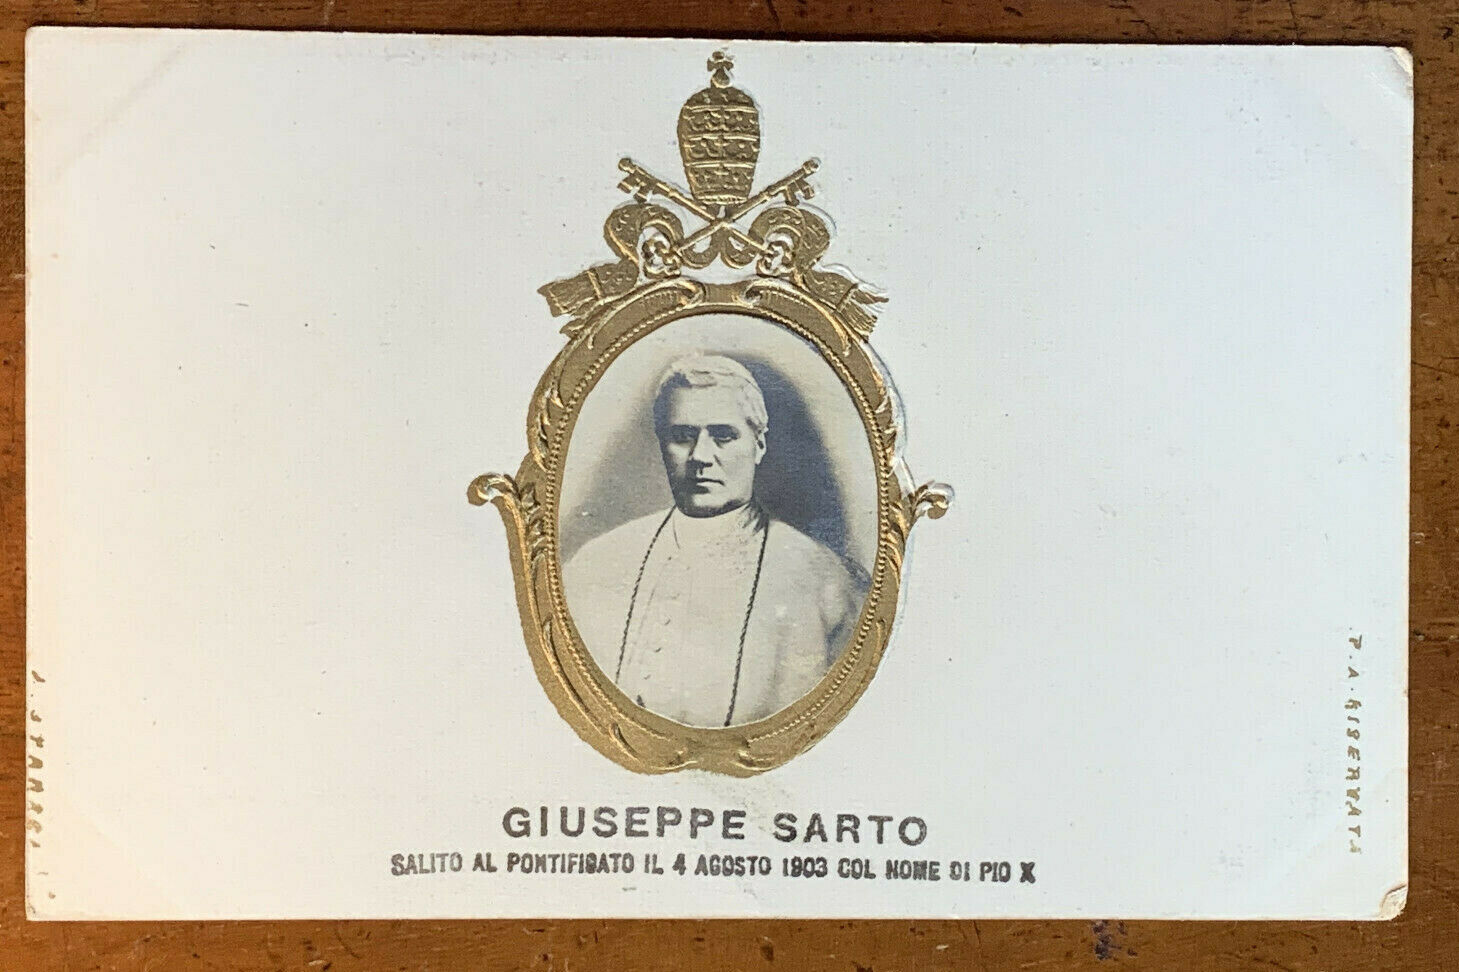 Giuseppe Sarto, Salito Pontificato 1903, Real Photo Insert, ca 1905